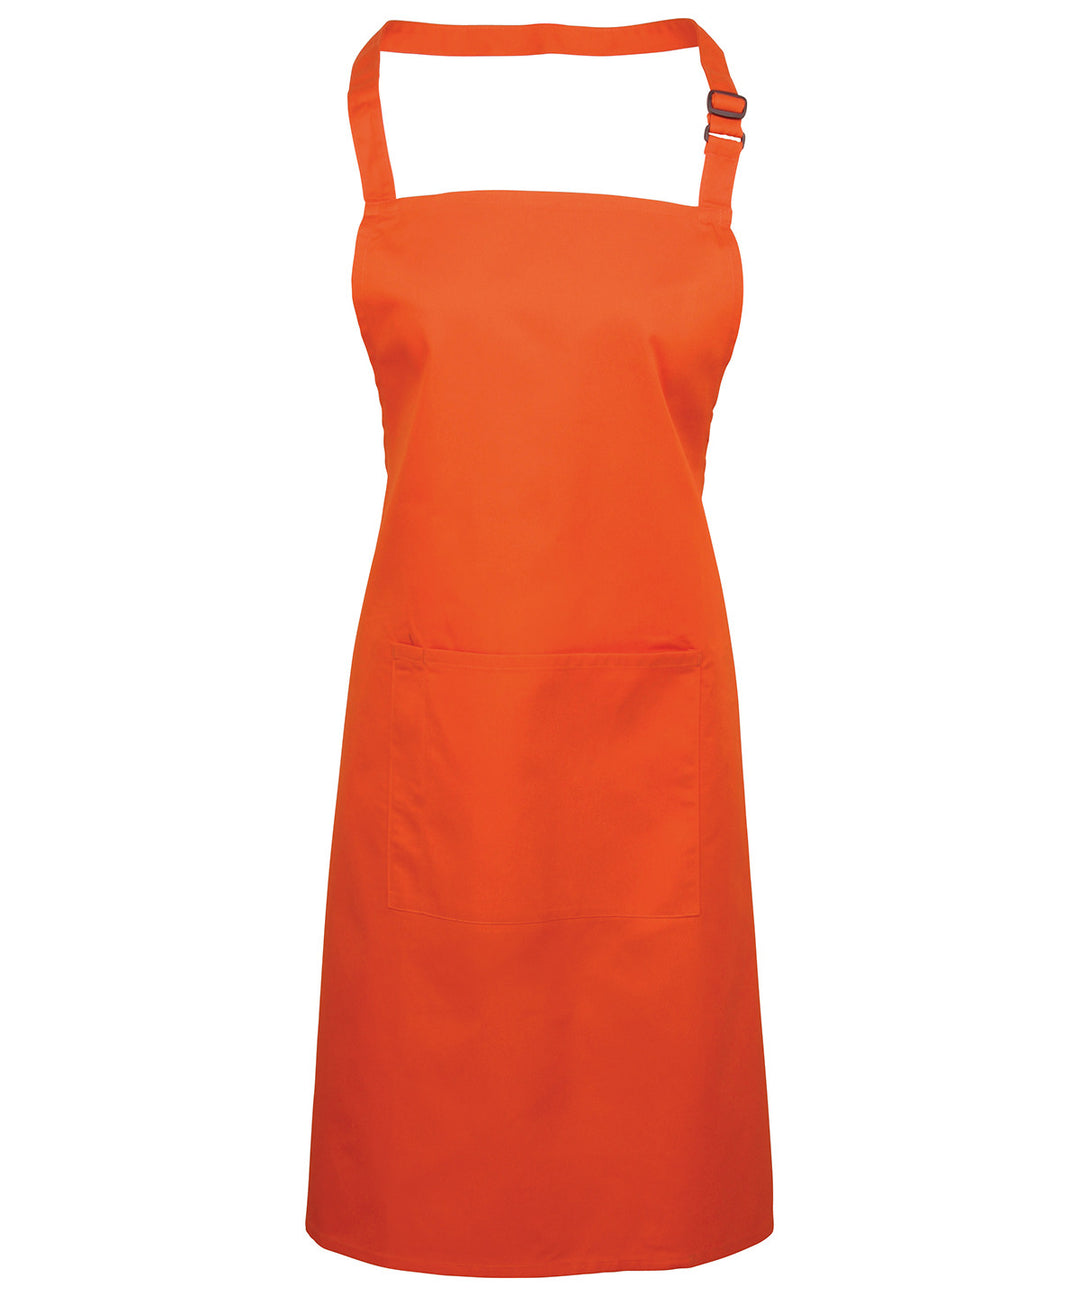 a women's orange apron dress with straps